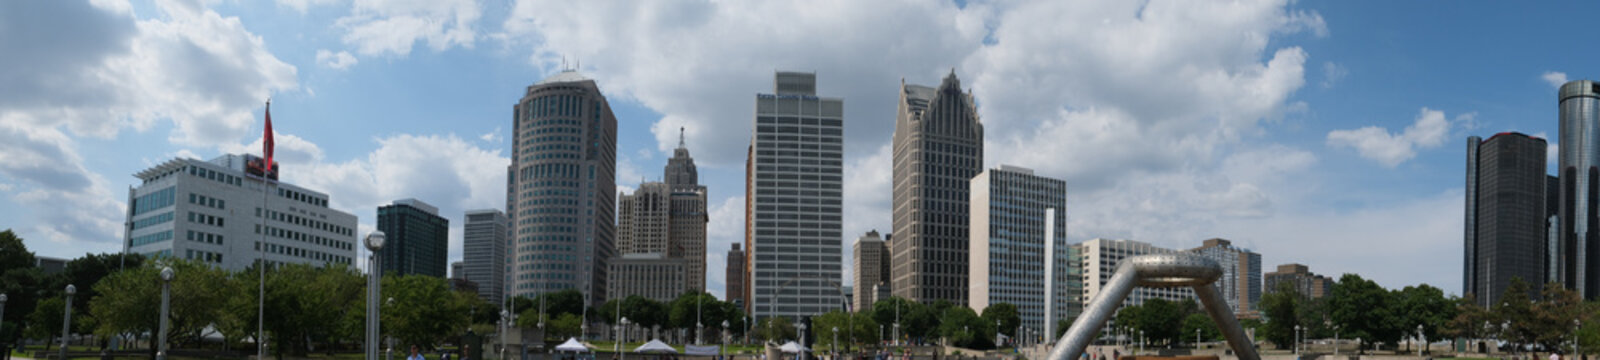 Detroit Panorama